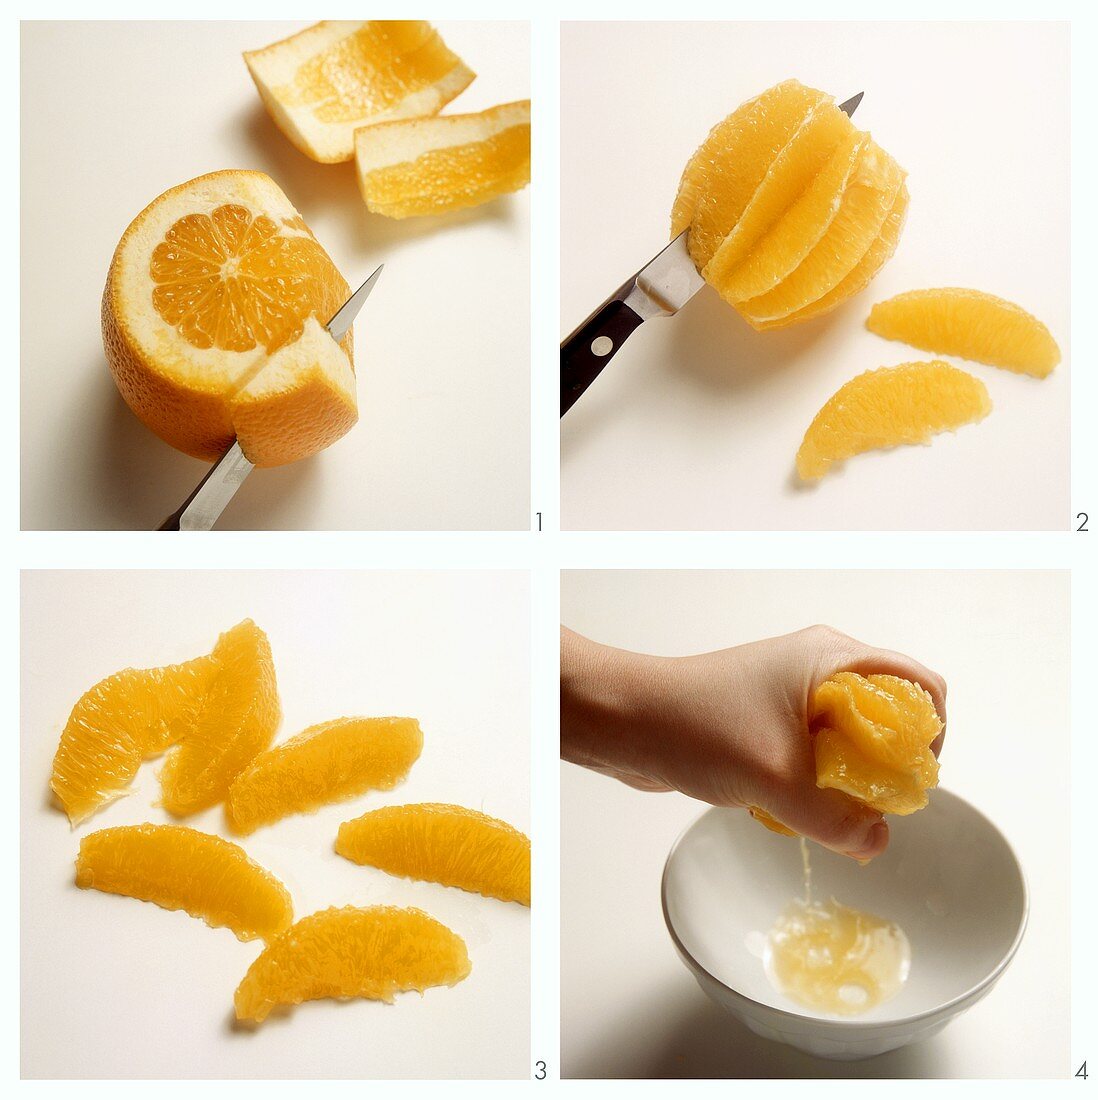 Dividing an orange into segments